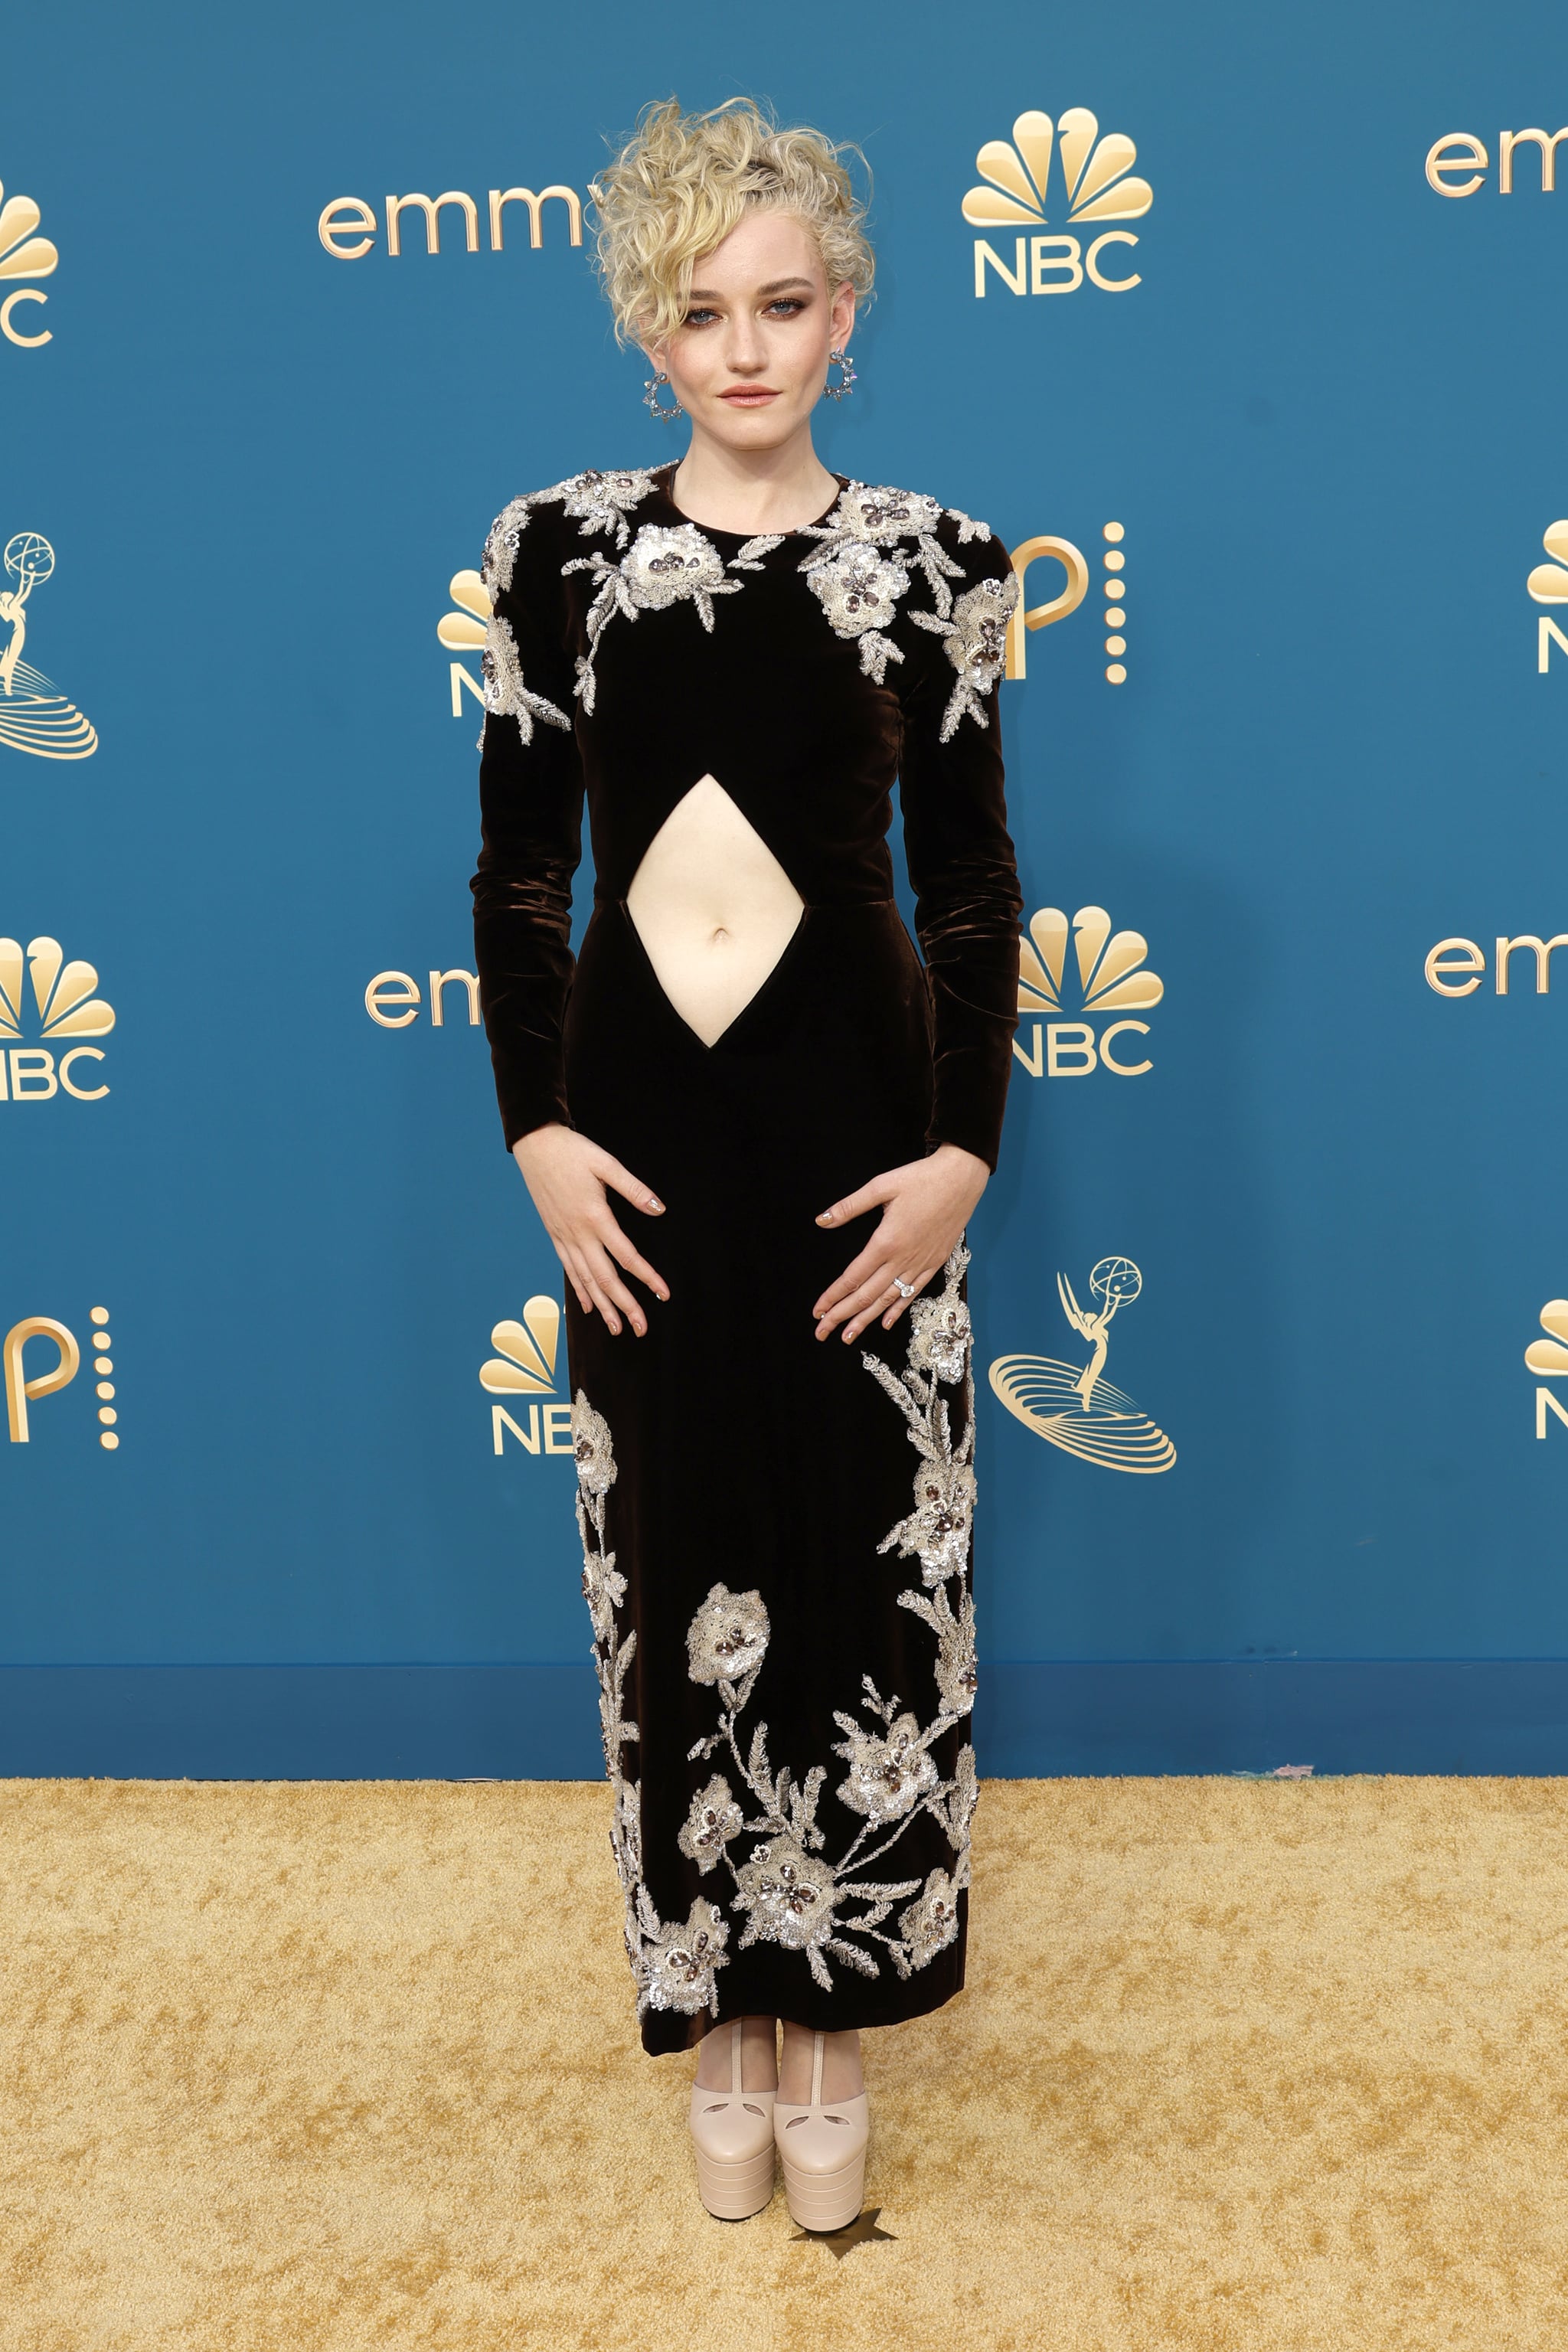 Garner's Velvet Gucci Cutout Dress at the 2022 Emmys | POPSUGAR Fashion